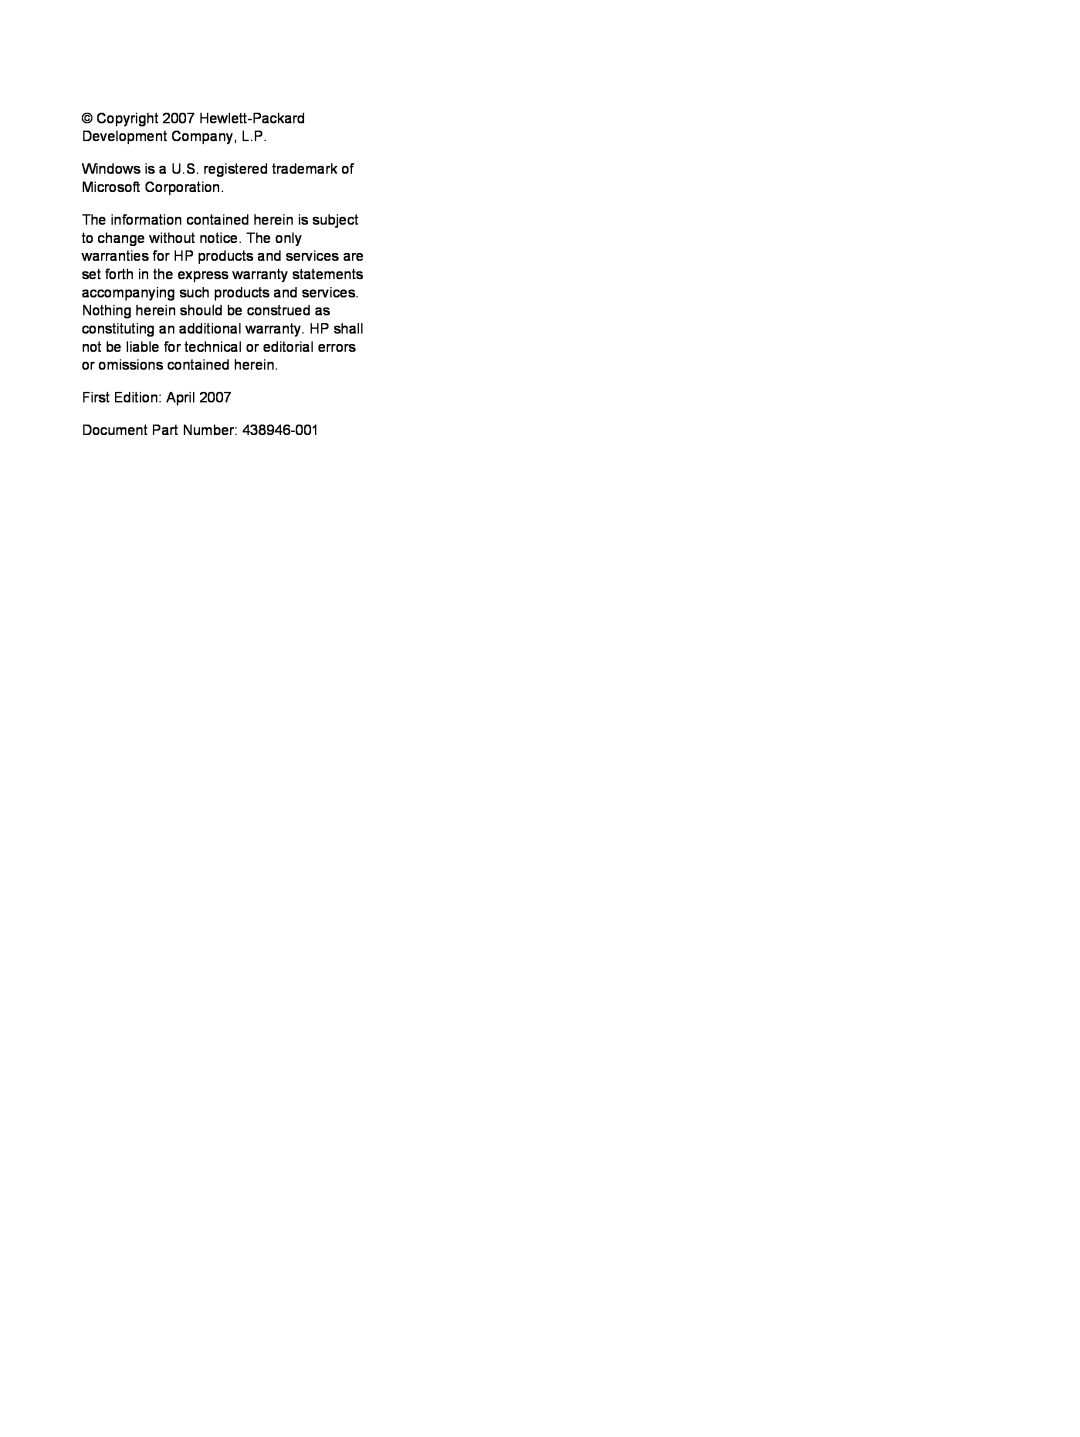 HP V6616TU, V6618AU manual Copyright 2007 Hewlett-Packard Development Company, L.P, First Edition April Document Part Number 